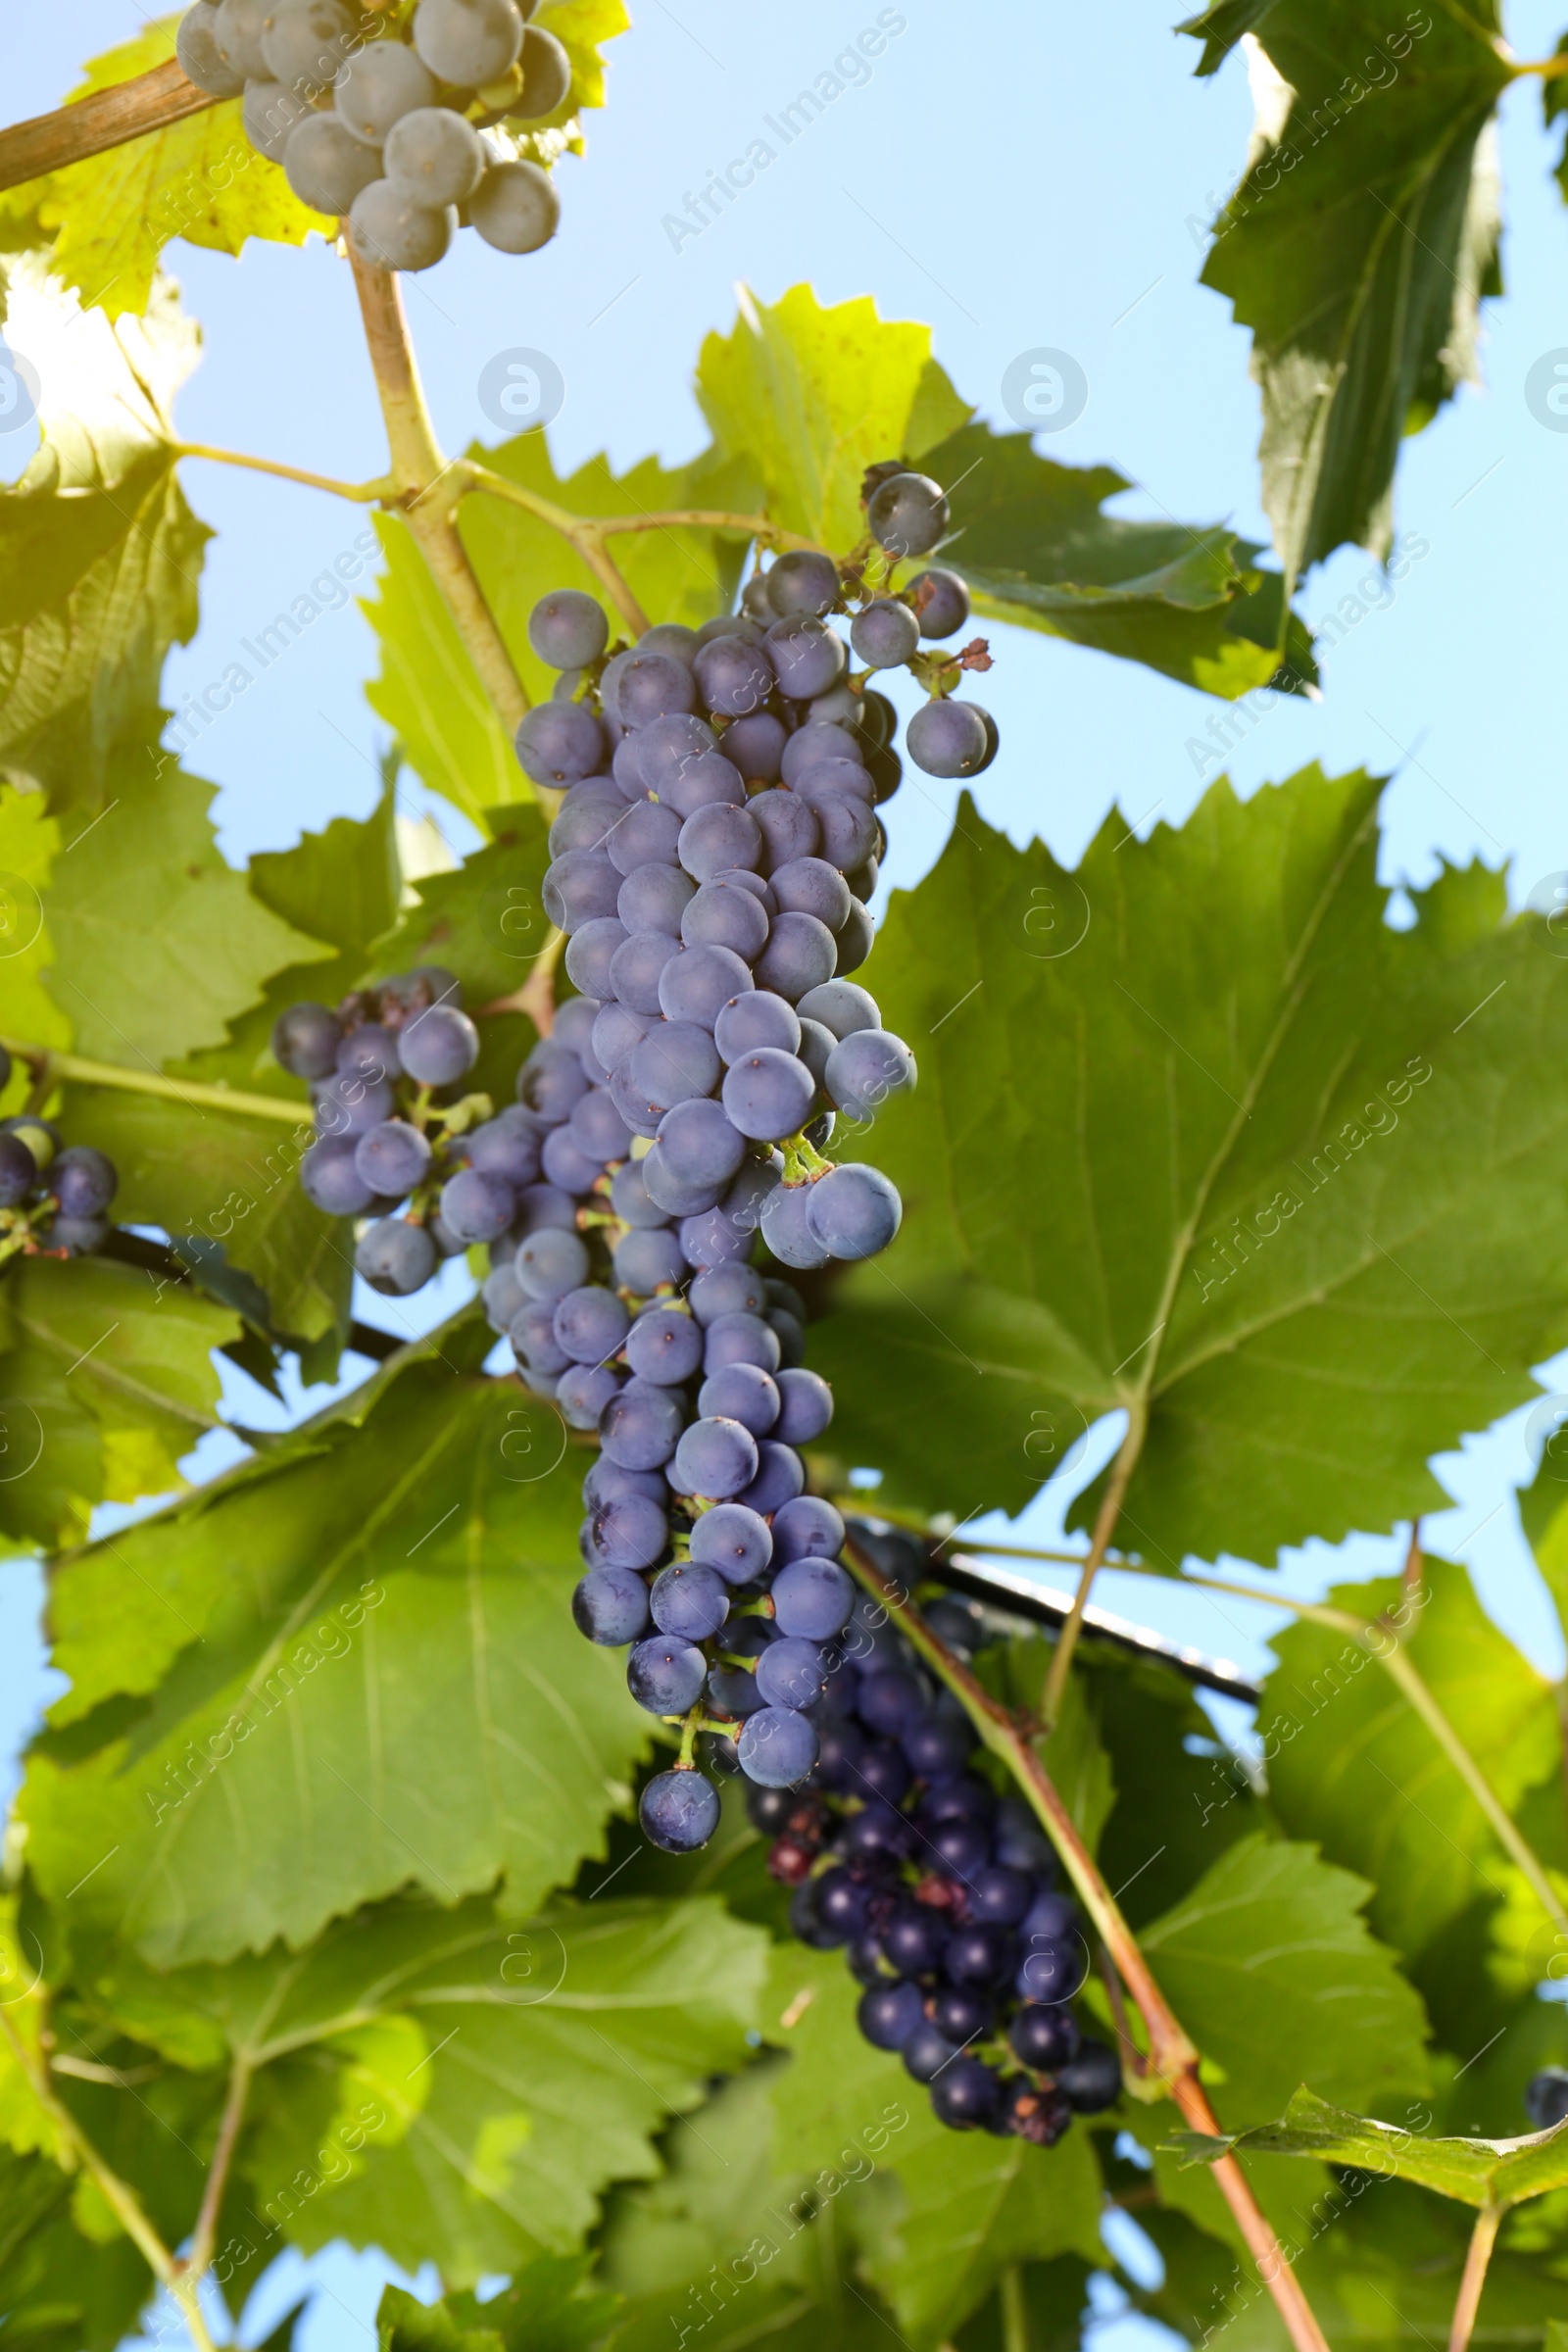 Photo of Ripe juicy grapes growing on branch in vineyard